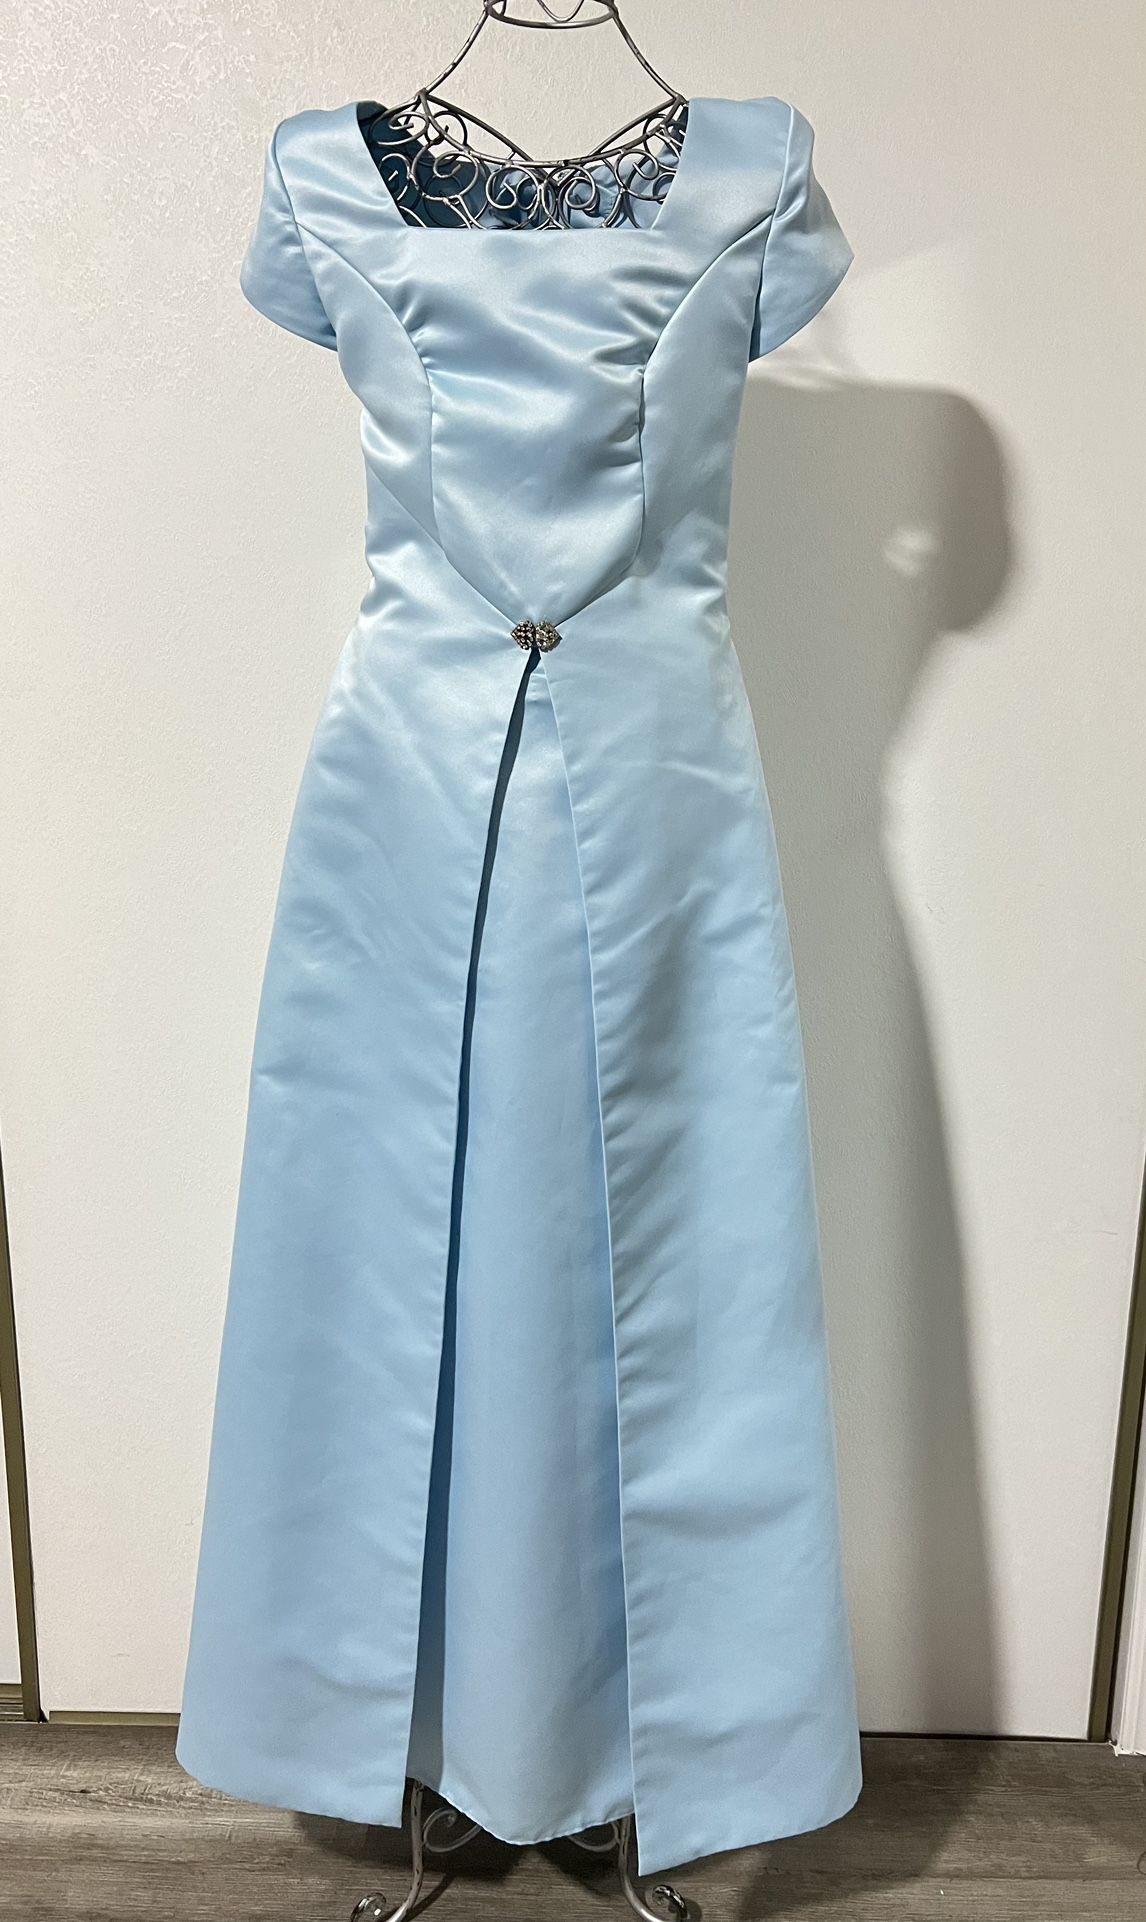 Dress   Dress Etemity EY MILEENNAL SUN BABY BLUE Satin Dress,  Size 8/10 Dress, KOKET Dress, Vintage 